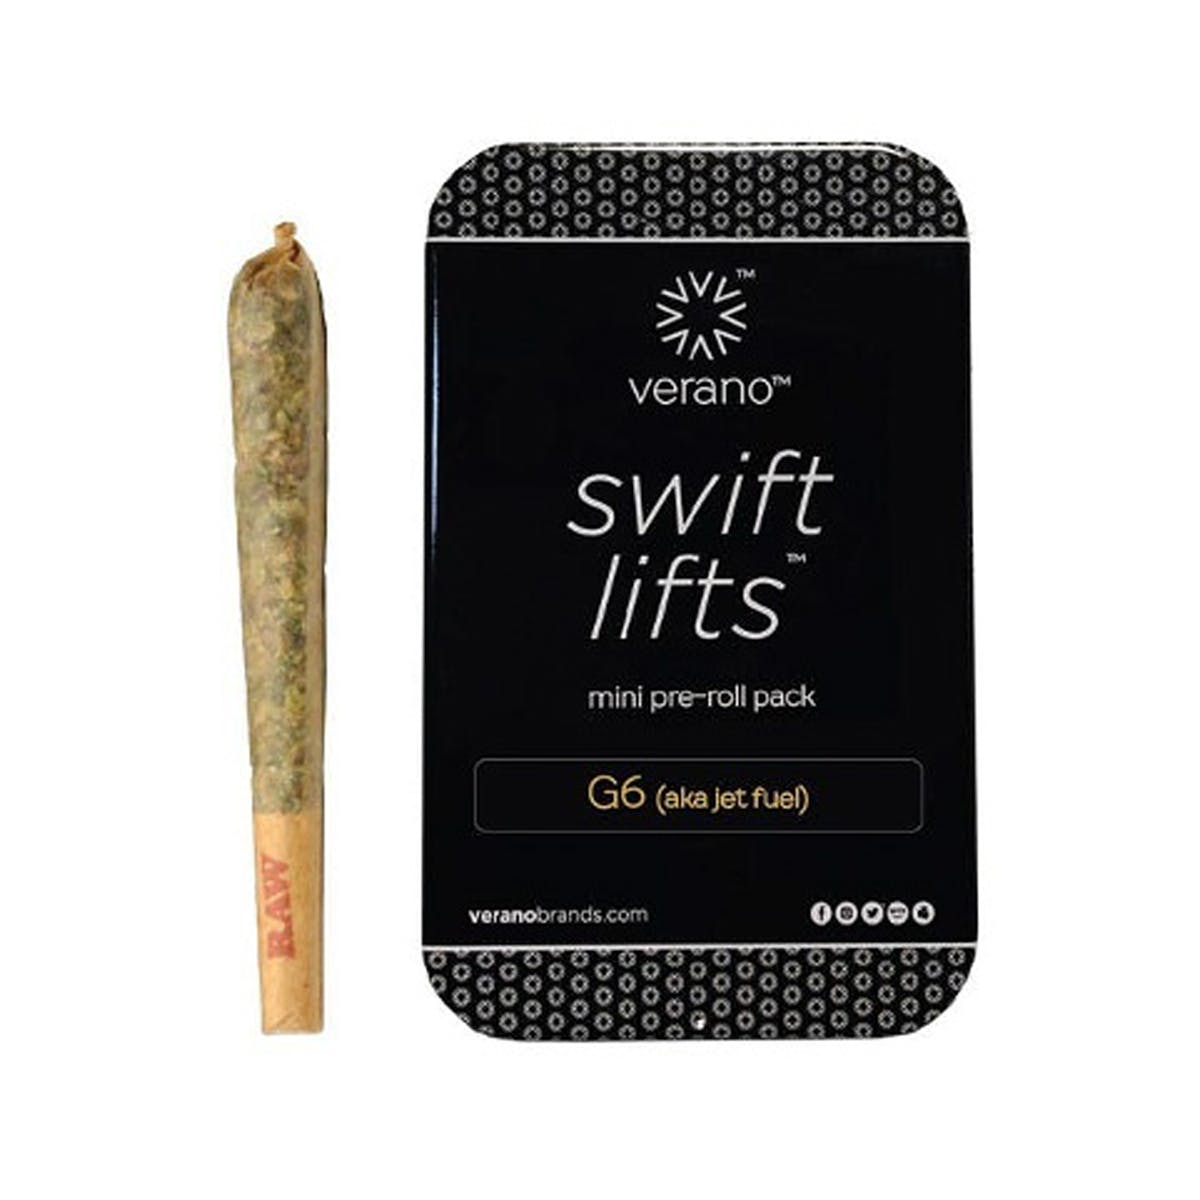 marijuana-dispensaries-mary-a-main-in-capitol-heights-swift-liftsa-c2-84c-mini-pre-roll-pack-g6-jet-fuel